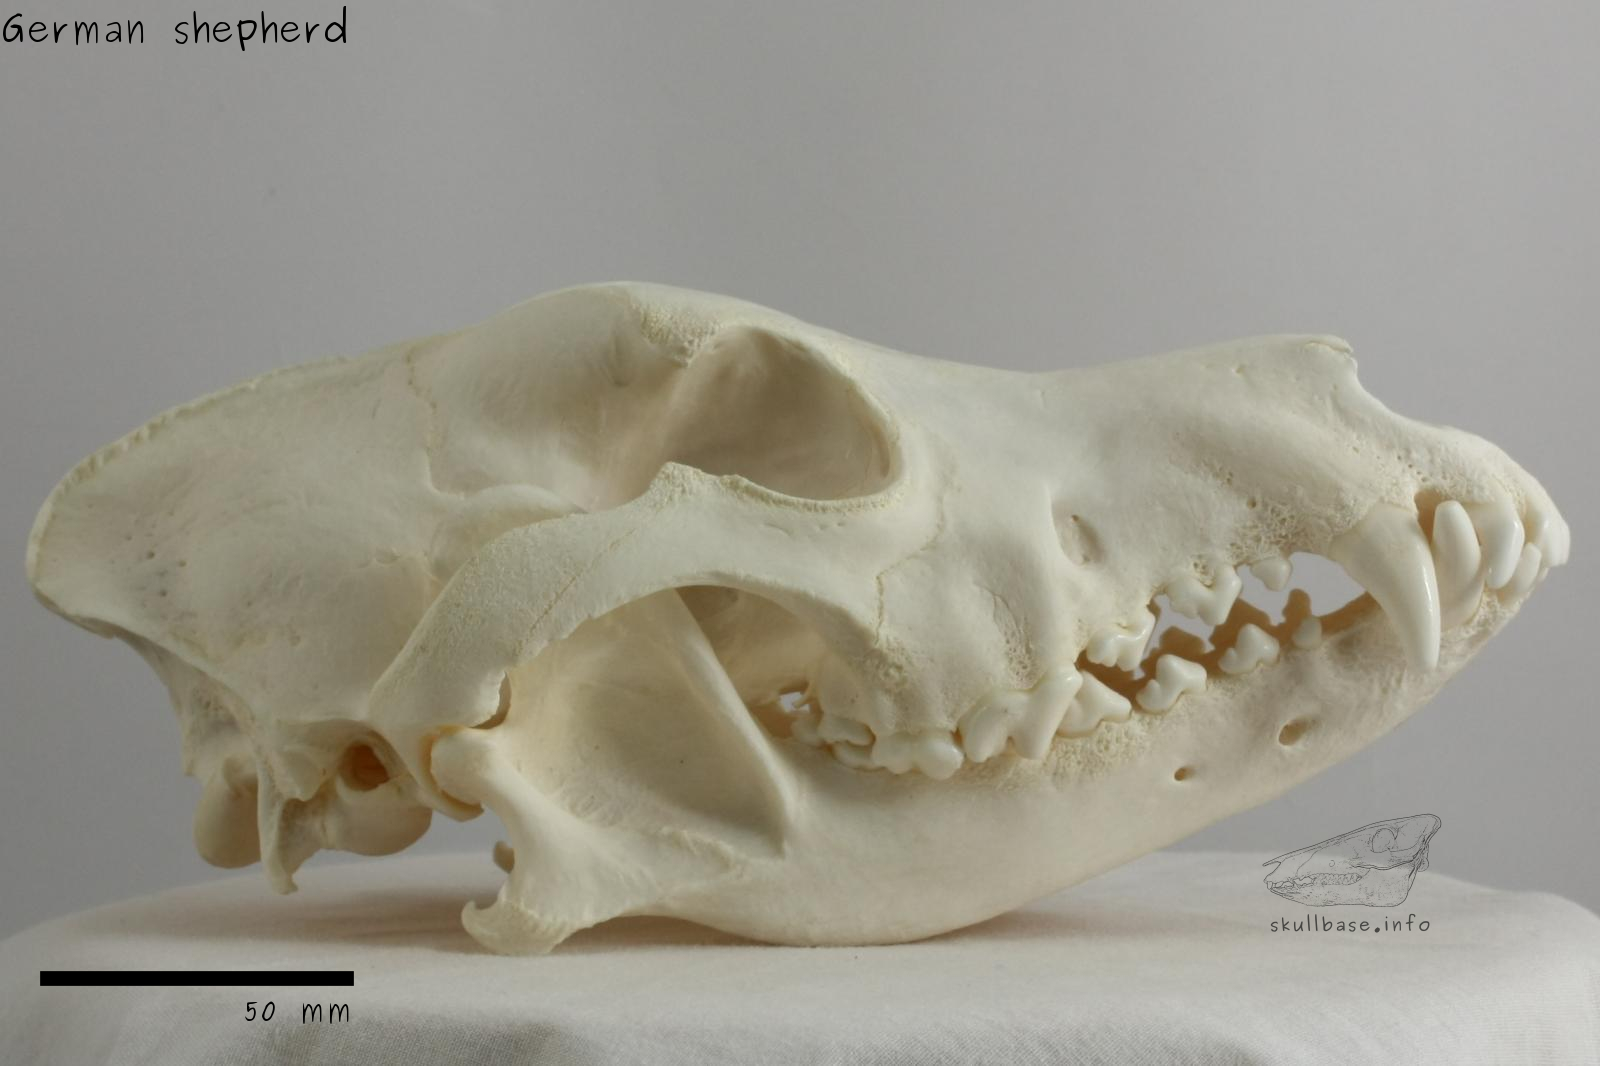 German shepherd (Canis lupus familiaris) skull lateral view